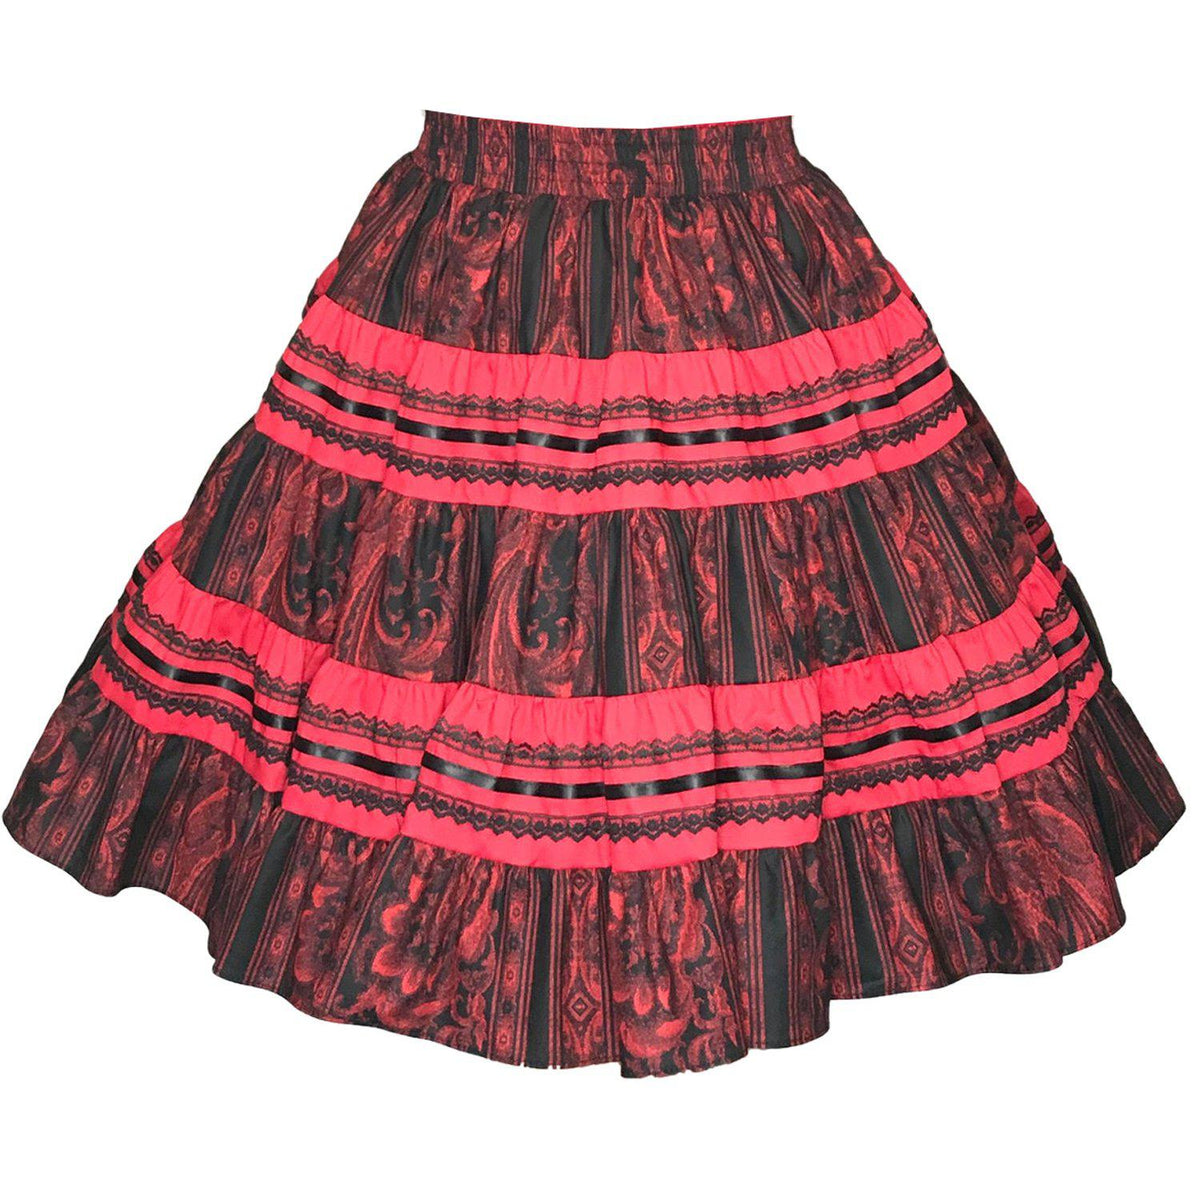 Regal Print Square Dance Skirt